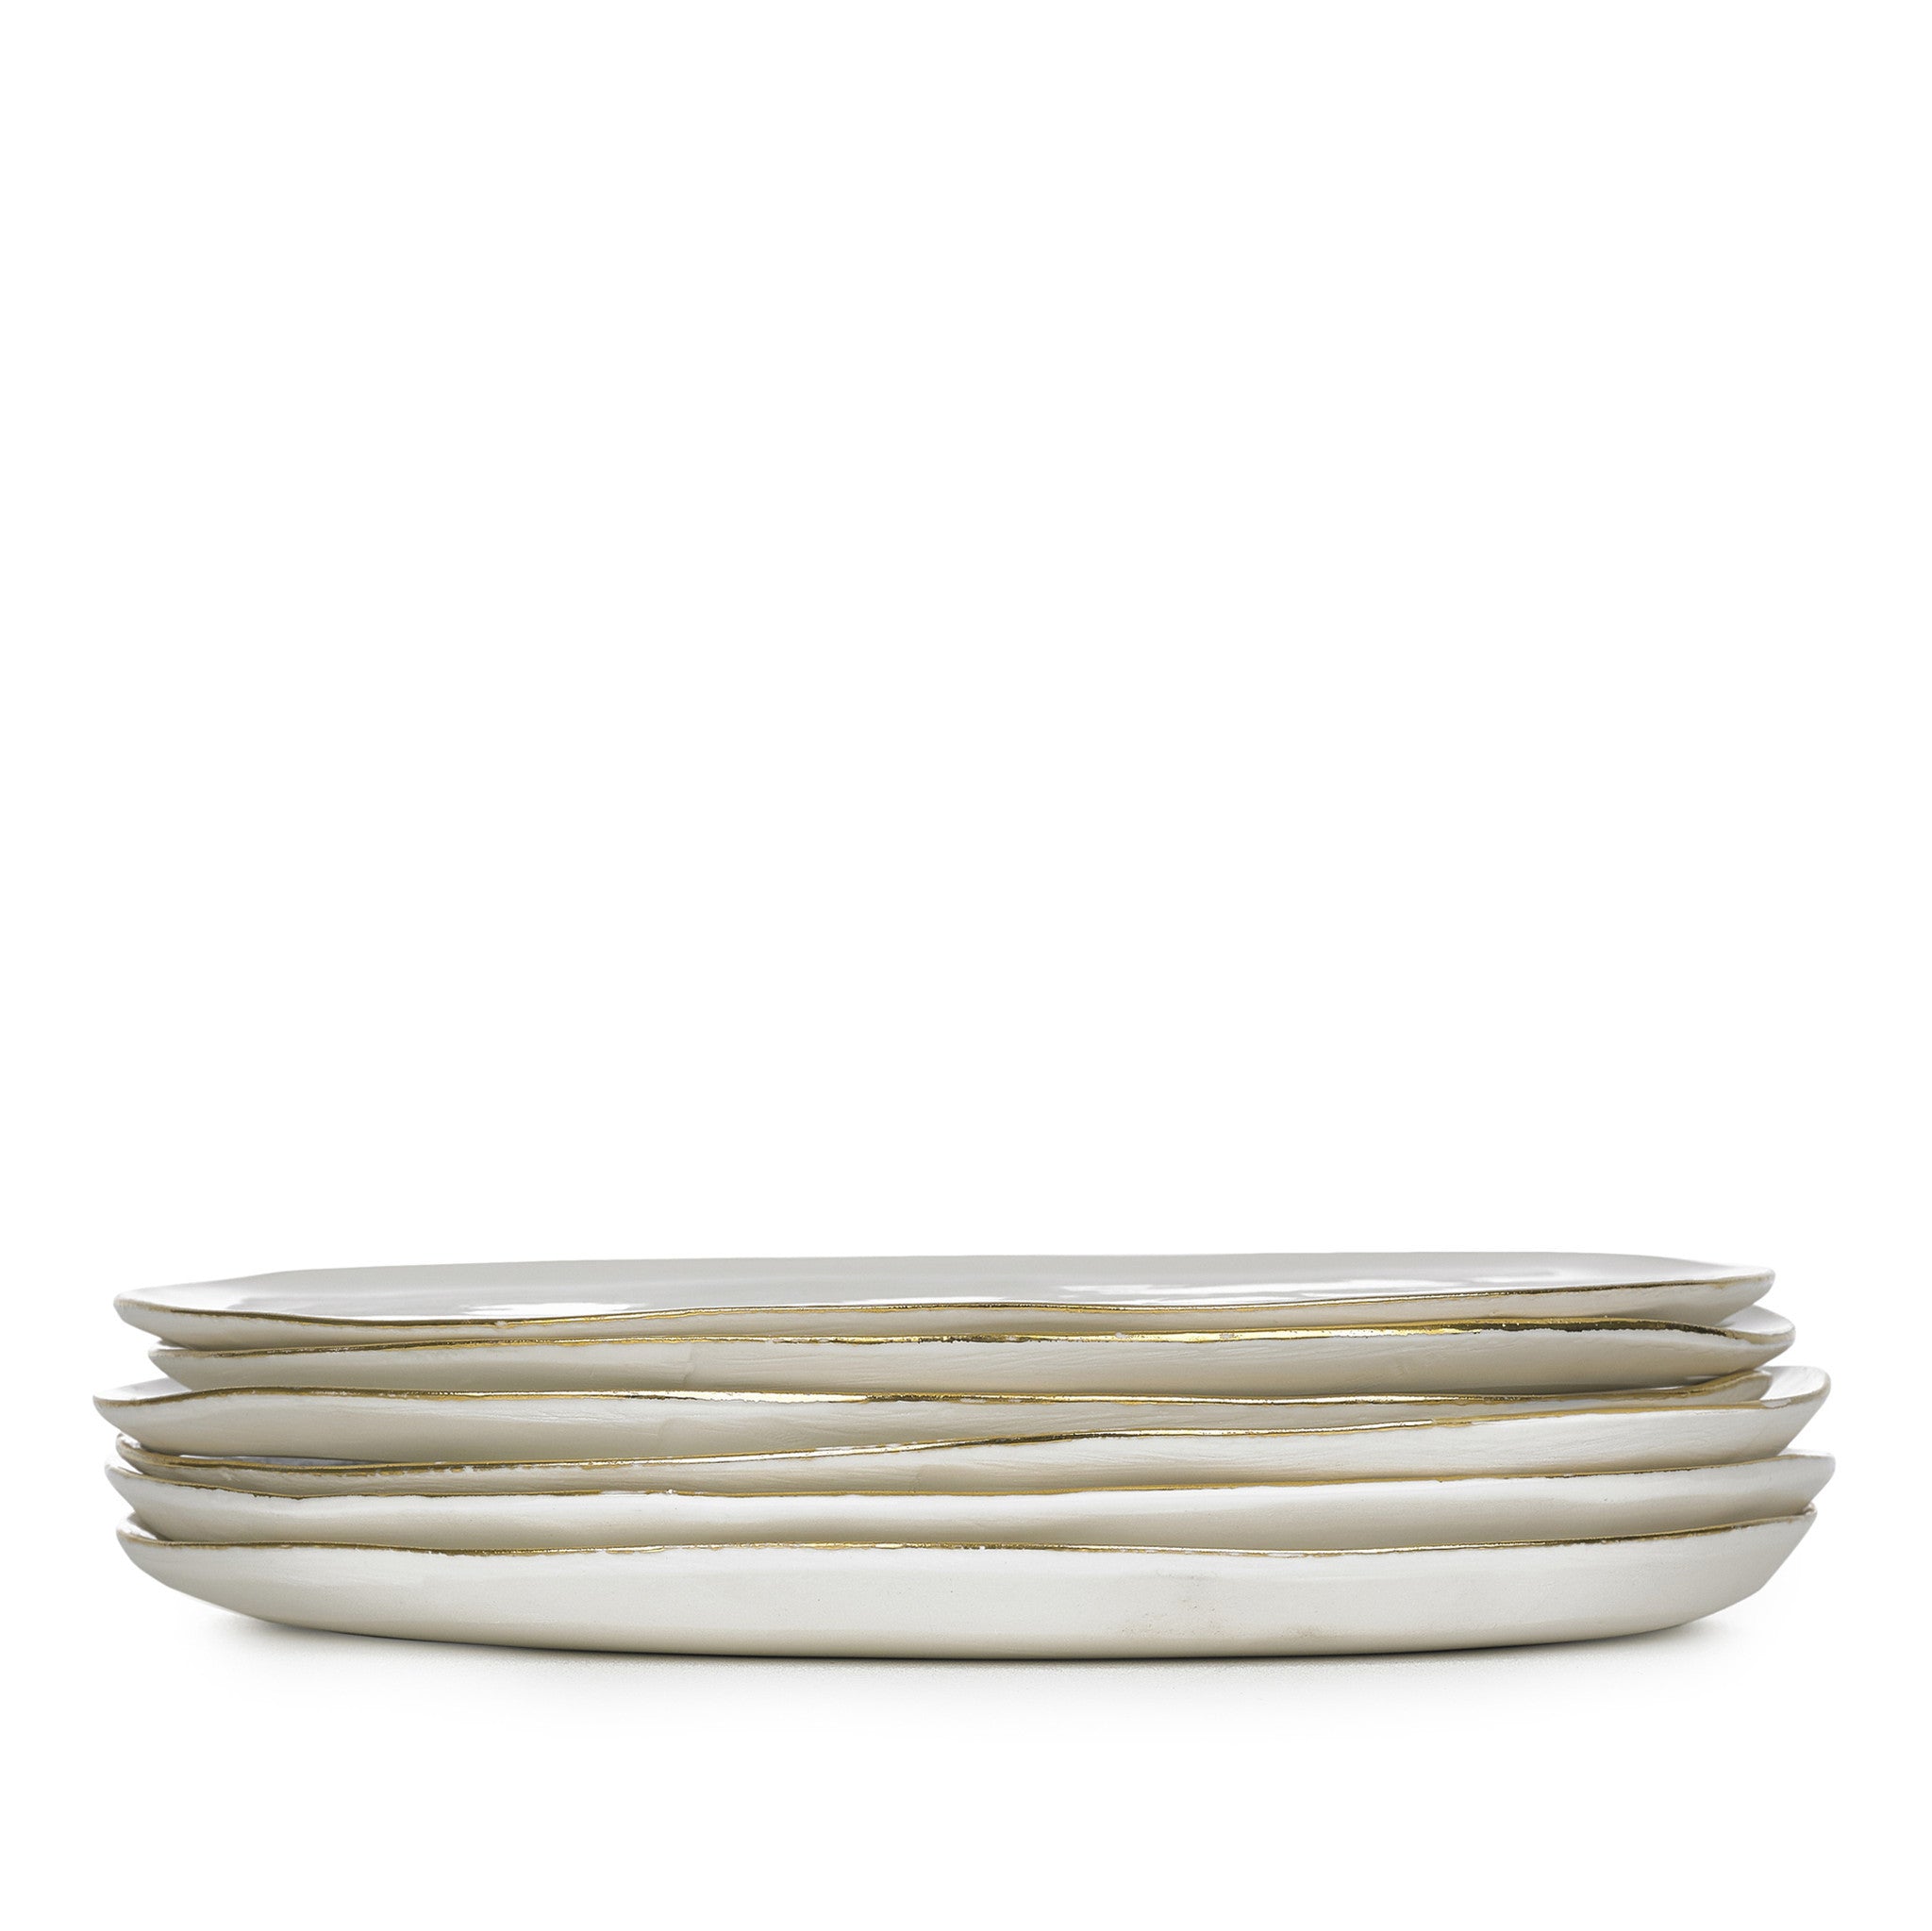 Summerill & Bishop Handmade 31cm Porcelain Dinner Plate with Gold Rim